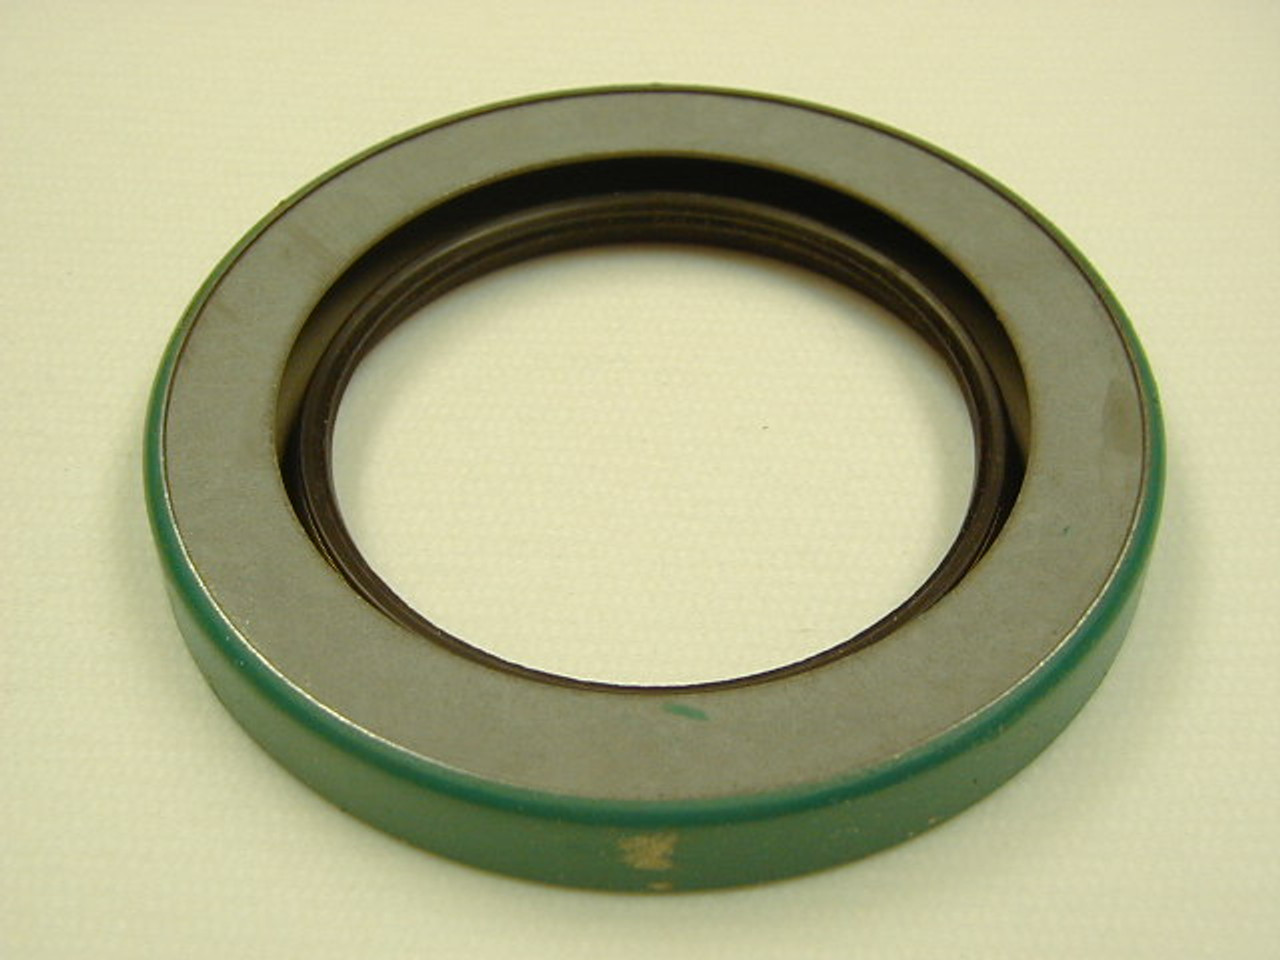 5.875" (149.23mm) Inch Reinforced Metal Single Lip Nitrile Oil Seal  58716 CRWH1 R